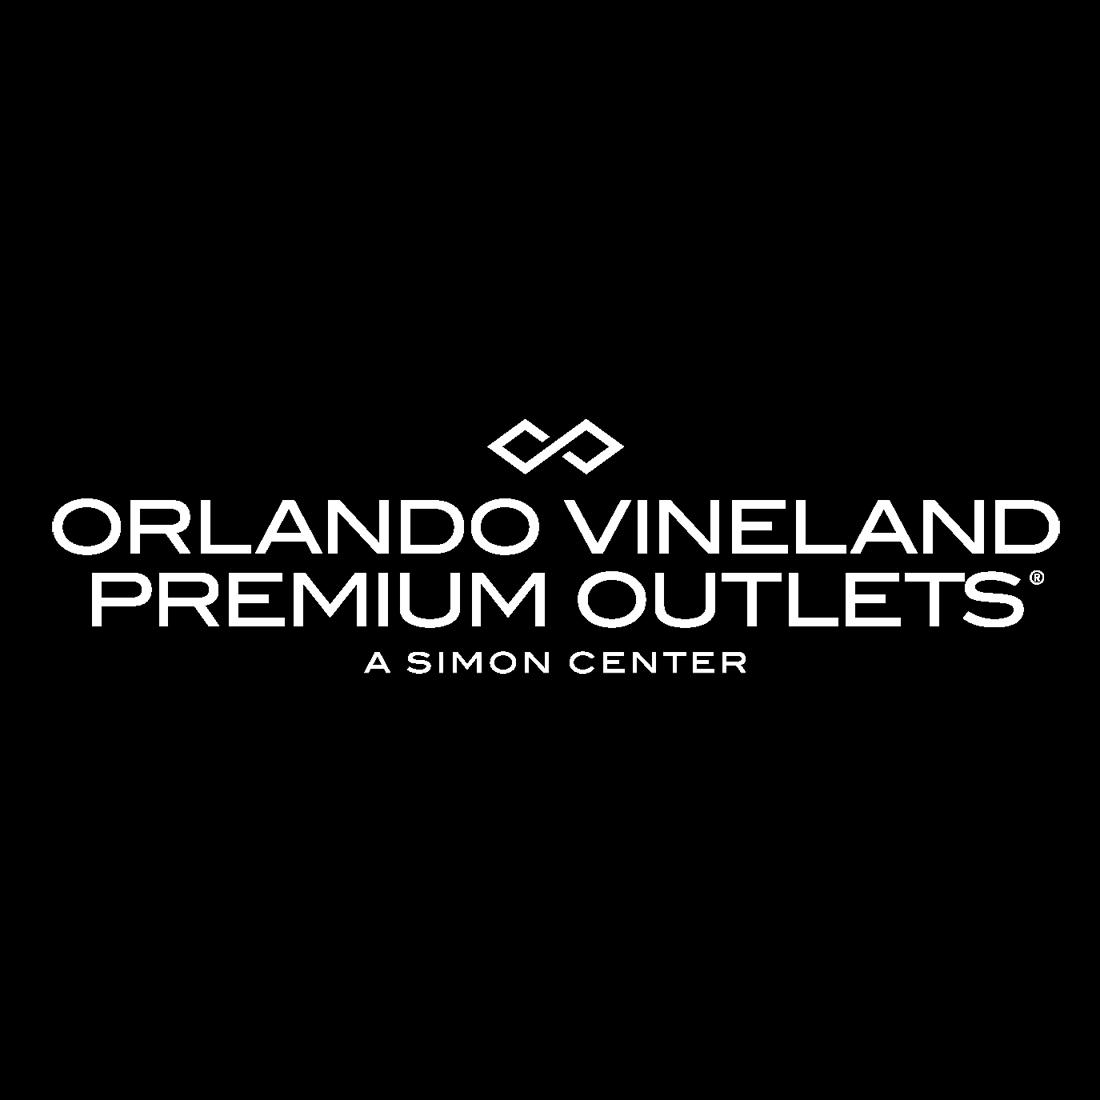 Orlando Vineland Premium Outlets - GUCCI 